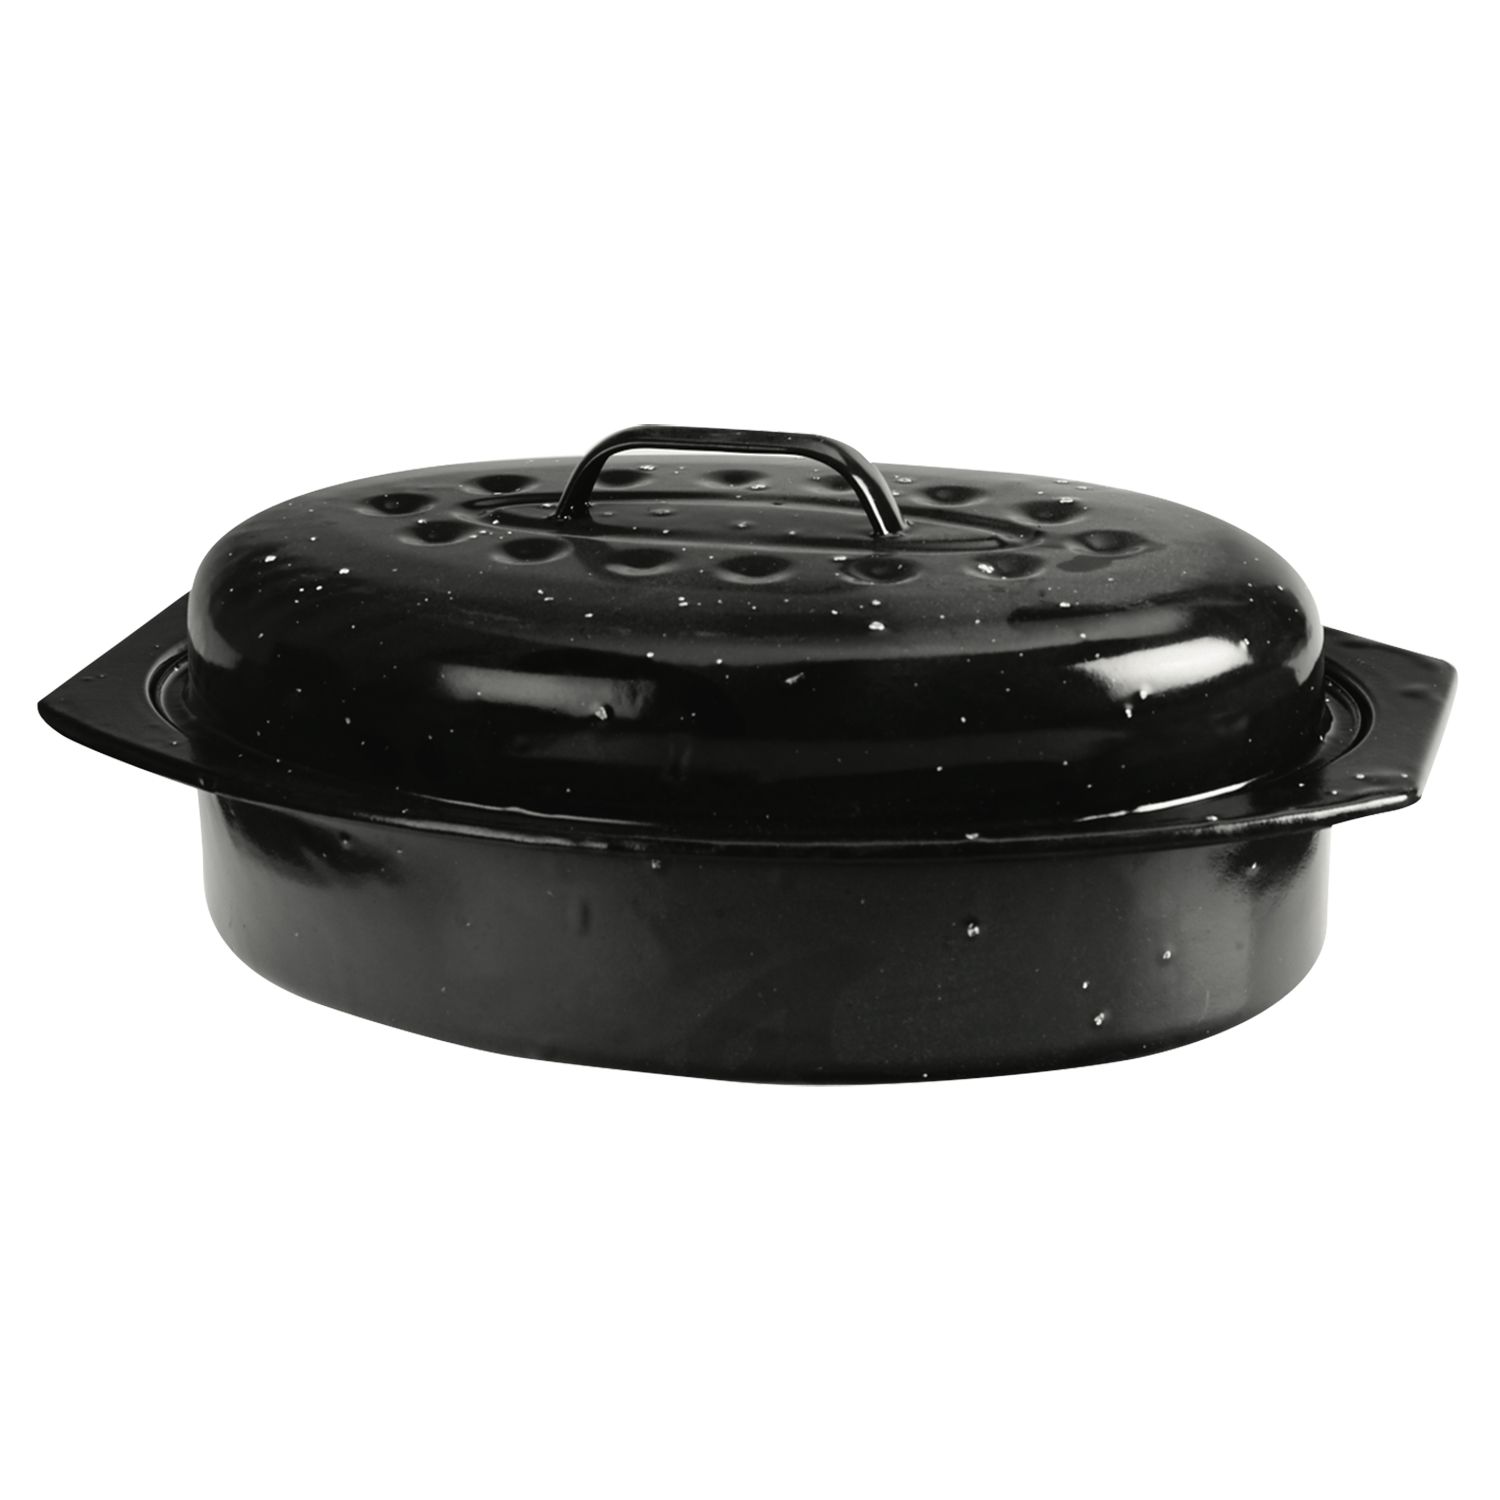 Black oval-shaped enamel roaster with lid, 13"